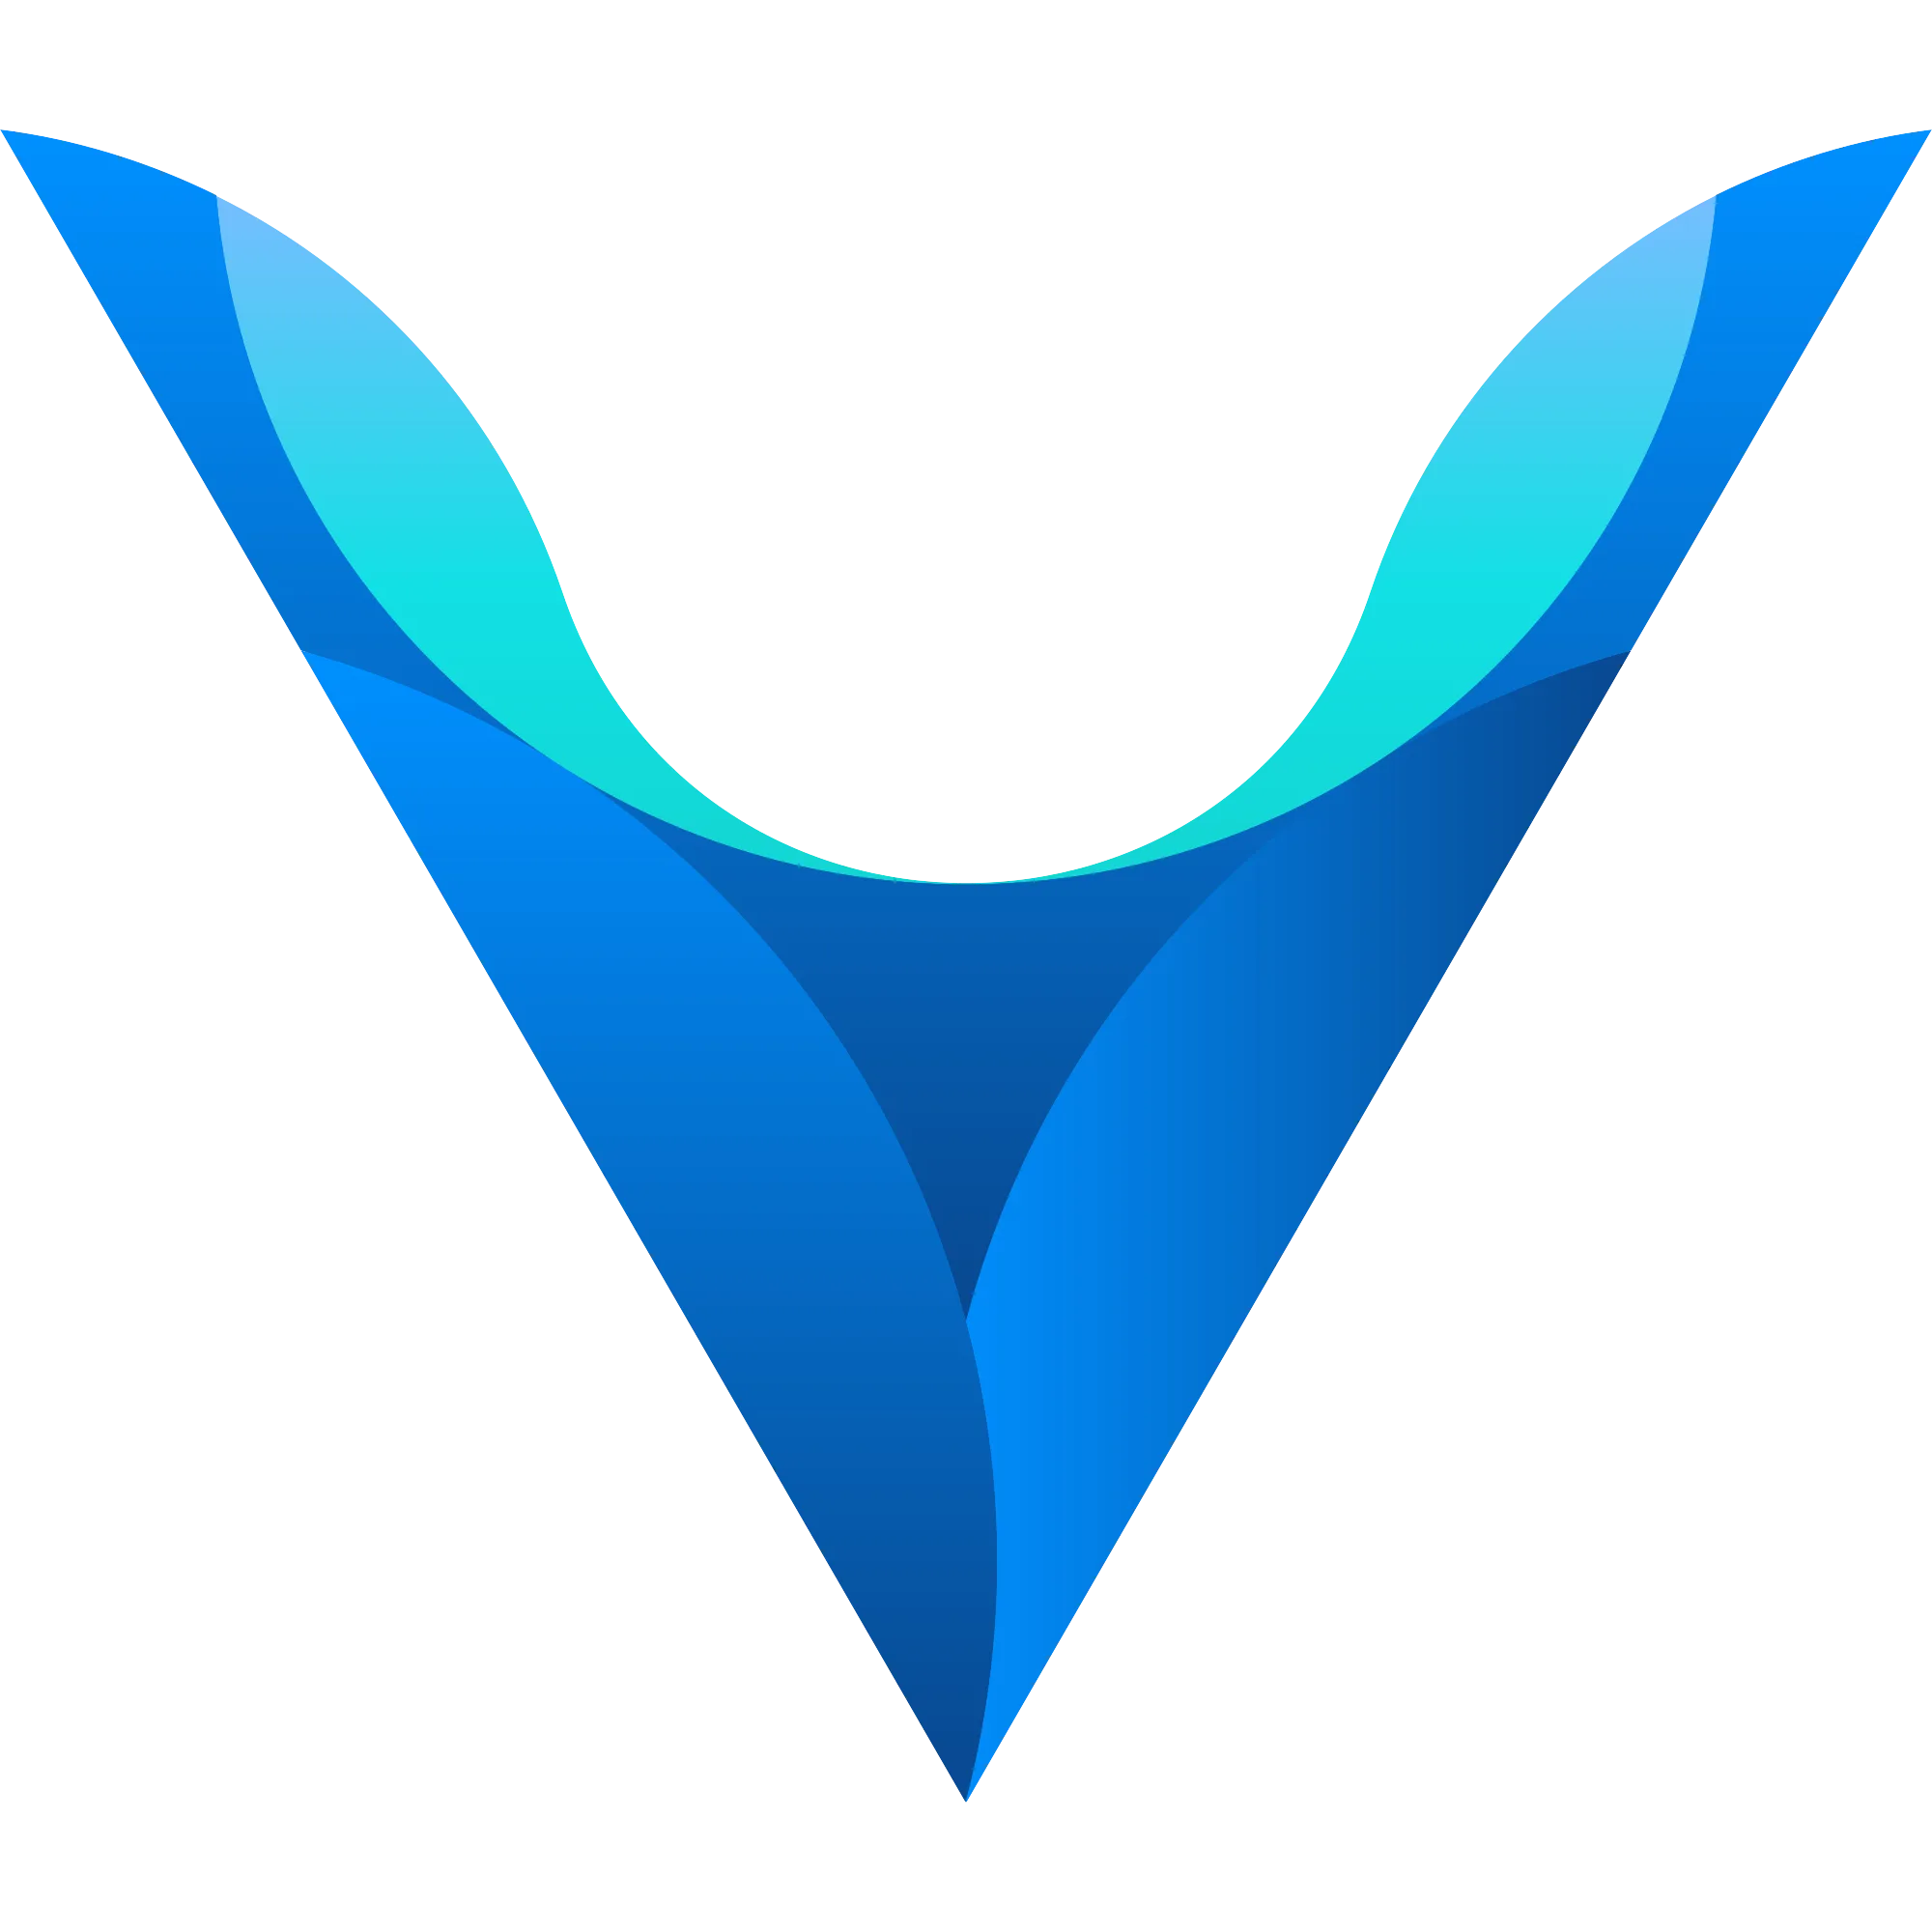 Veil logo in png format